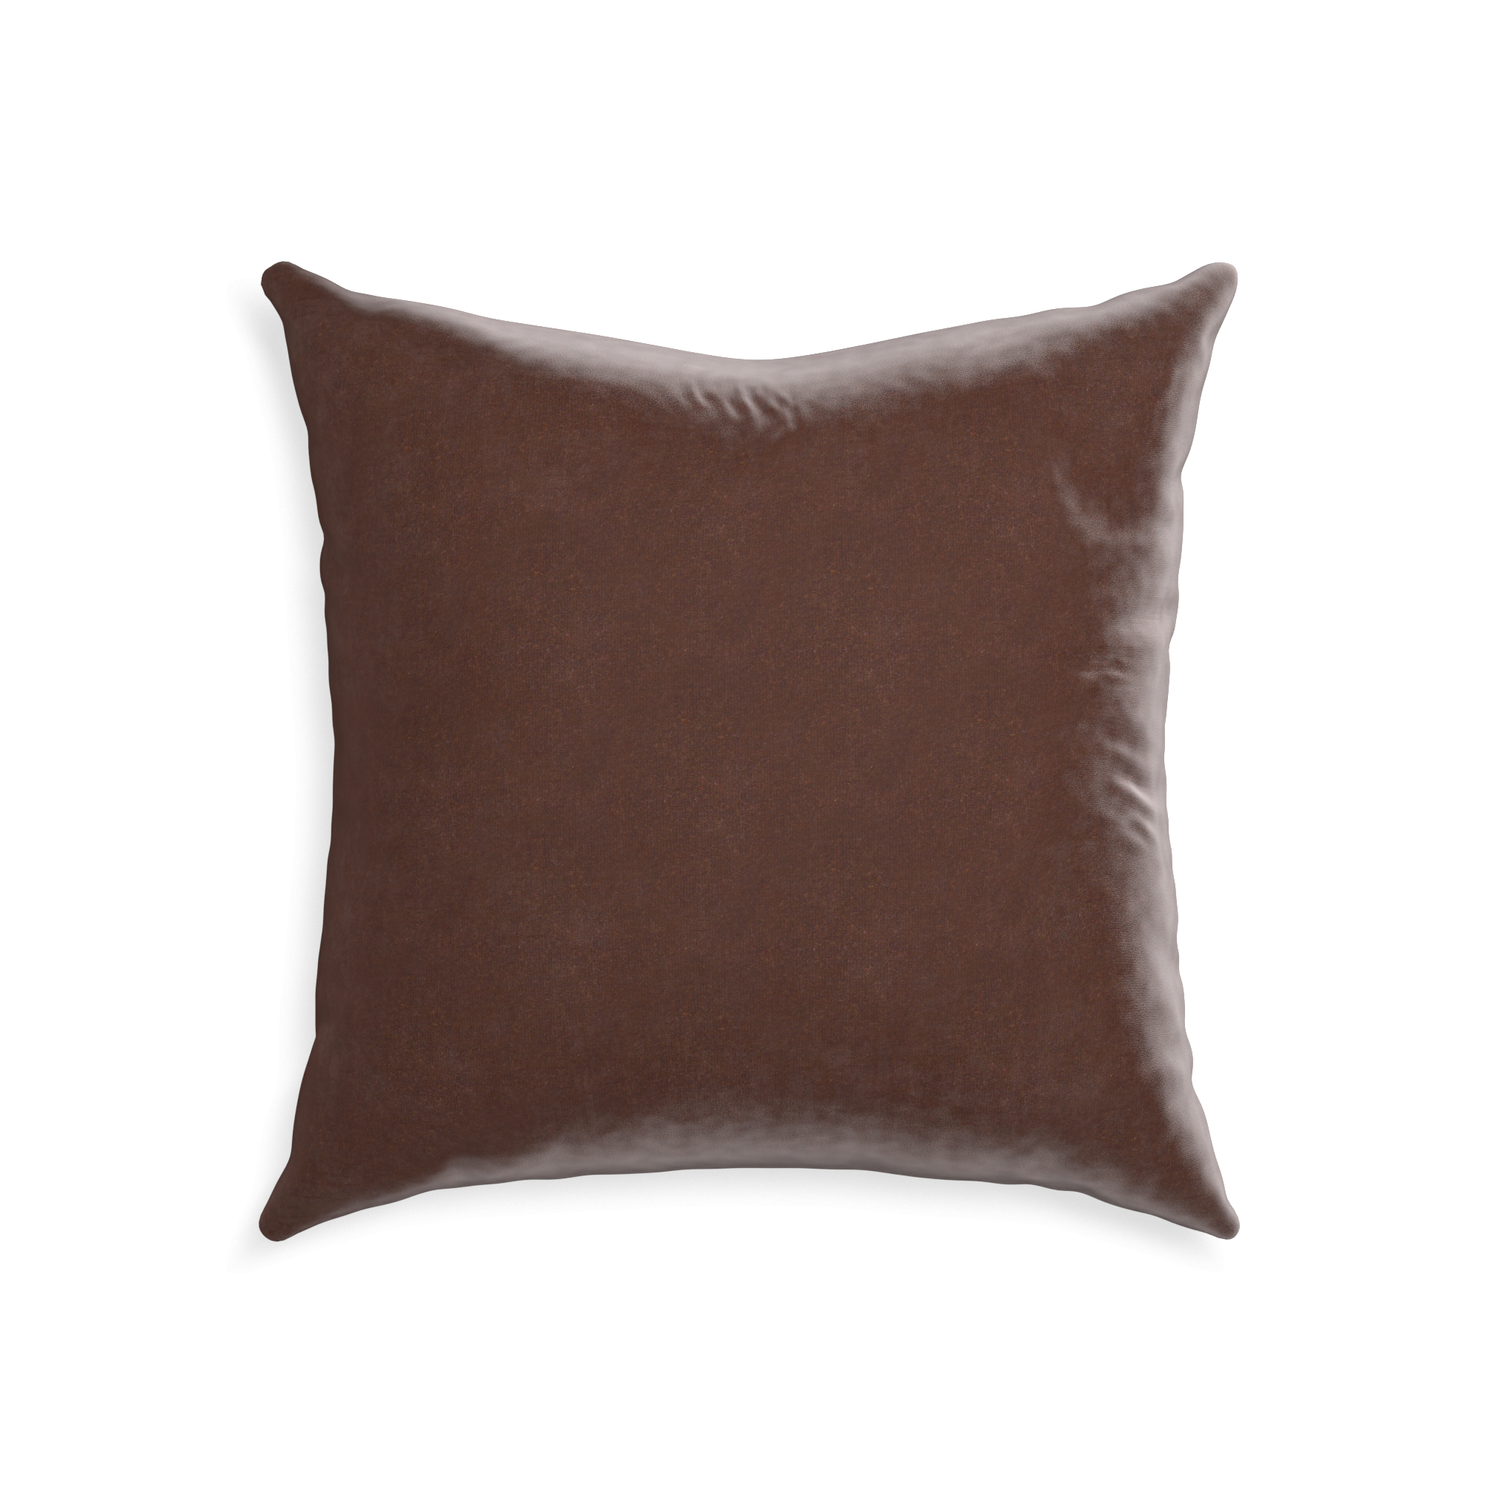 22-square walnut velvet custom pillow with none on white background